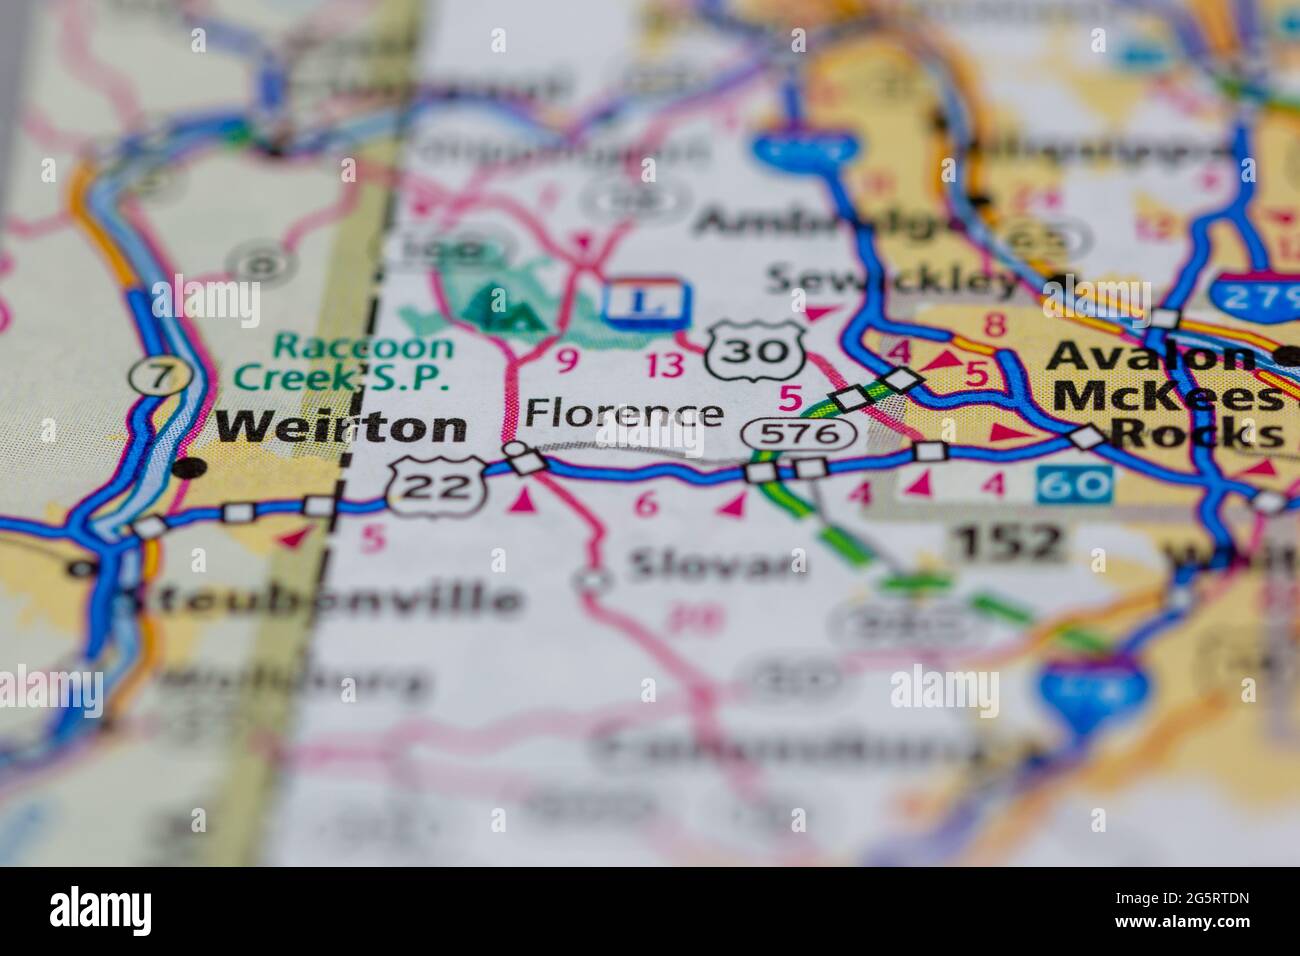 Florence Pennsylvania USA se muestra en un mapa geográfico o mapa de carreteras Foto de stock